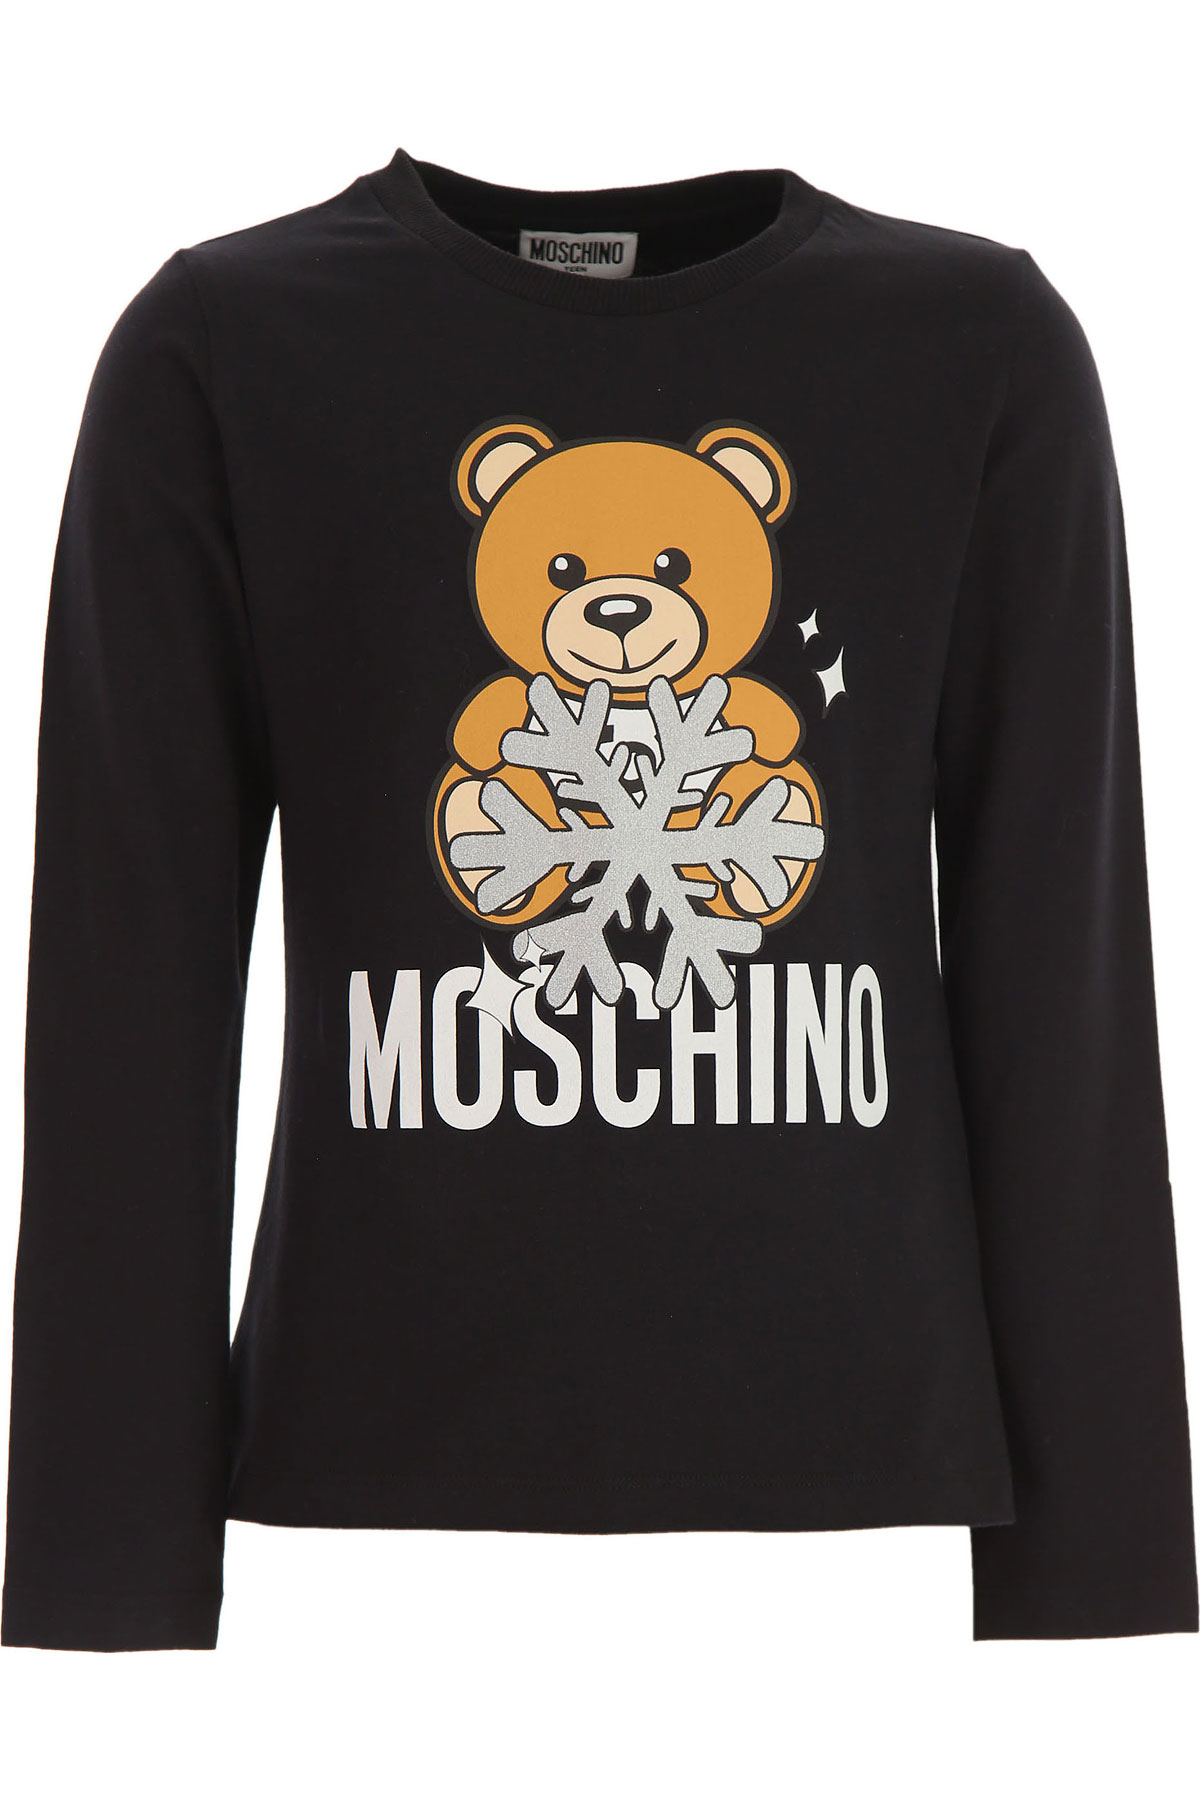 Moschino Kinder T-Shirt für Mädchen Günstig im Sale, Schwarz, Baumwolle, 2017, 10Y 12Y 4Y 6Y 8Y 8Y